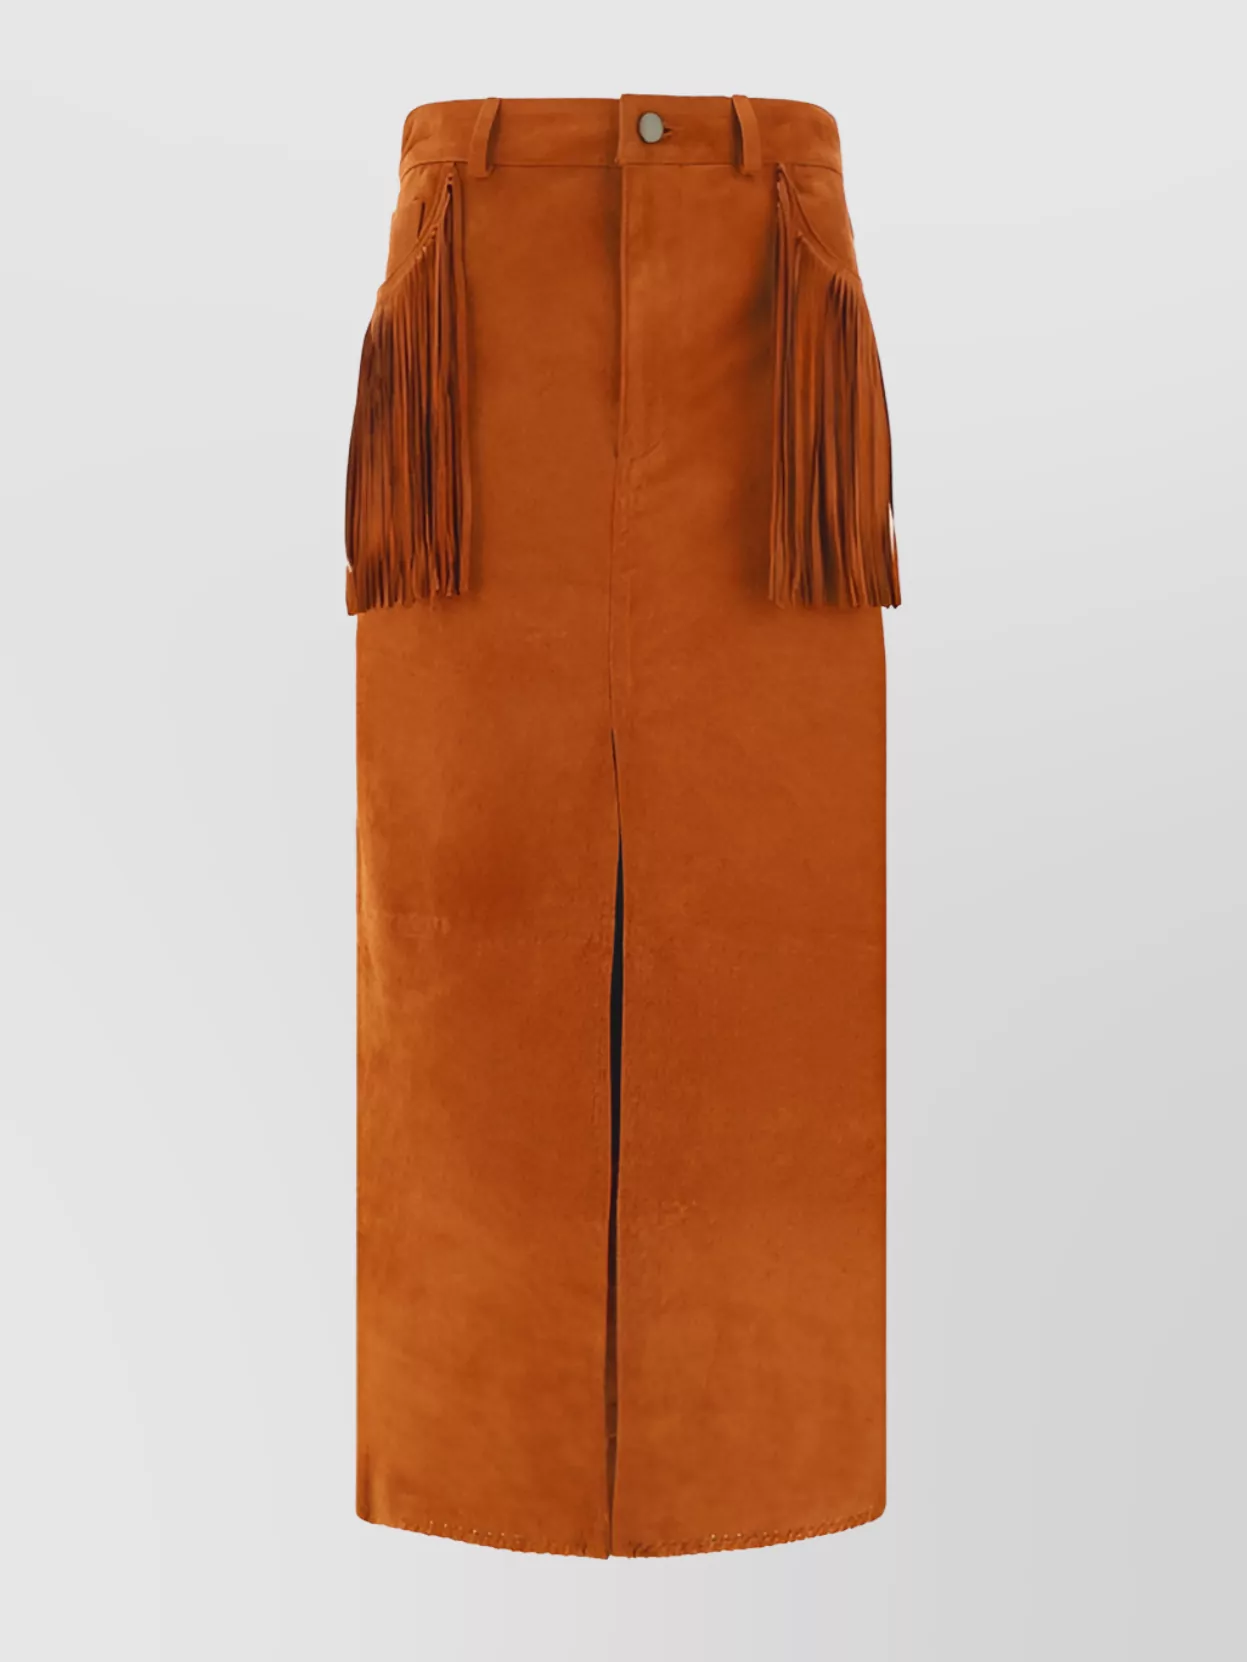 Shop Wild Cashmere Leather Skirt Fringe Detail